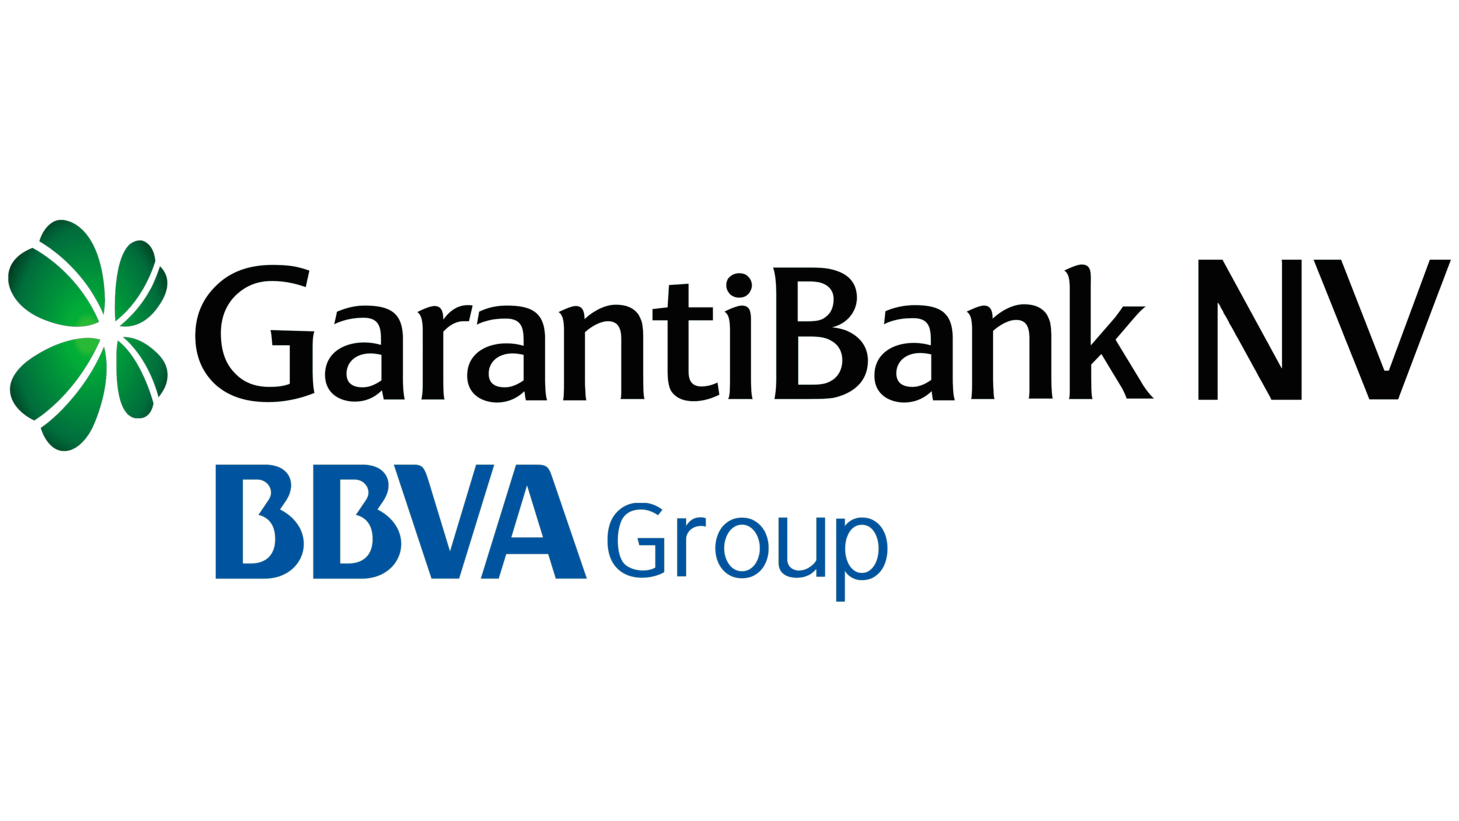 Garanti bank sign 2009 2018